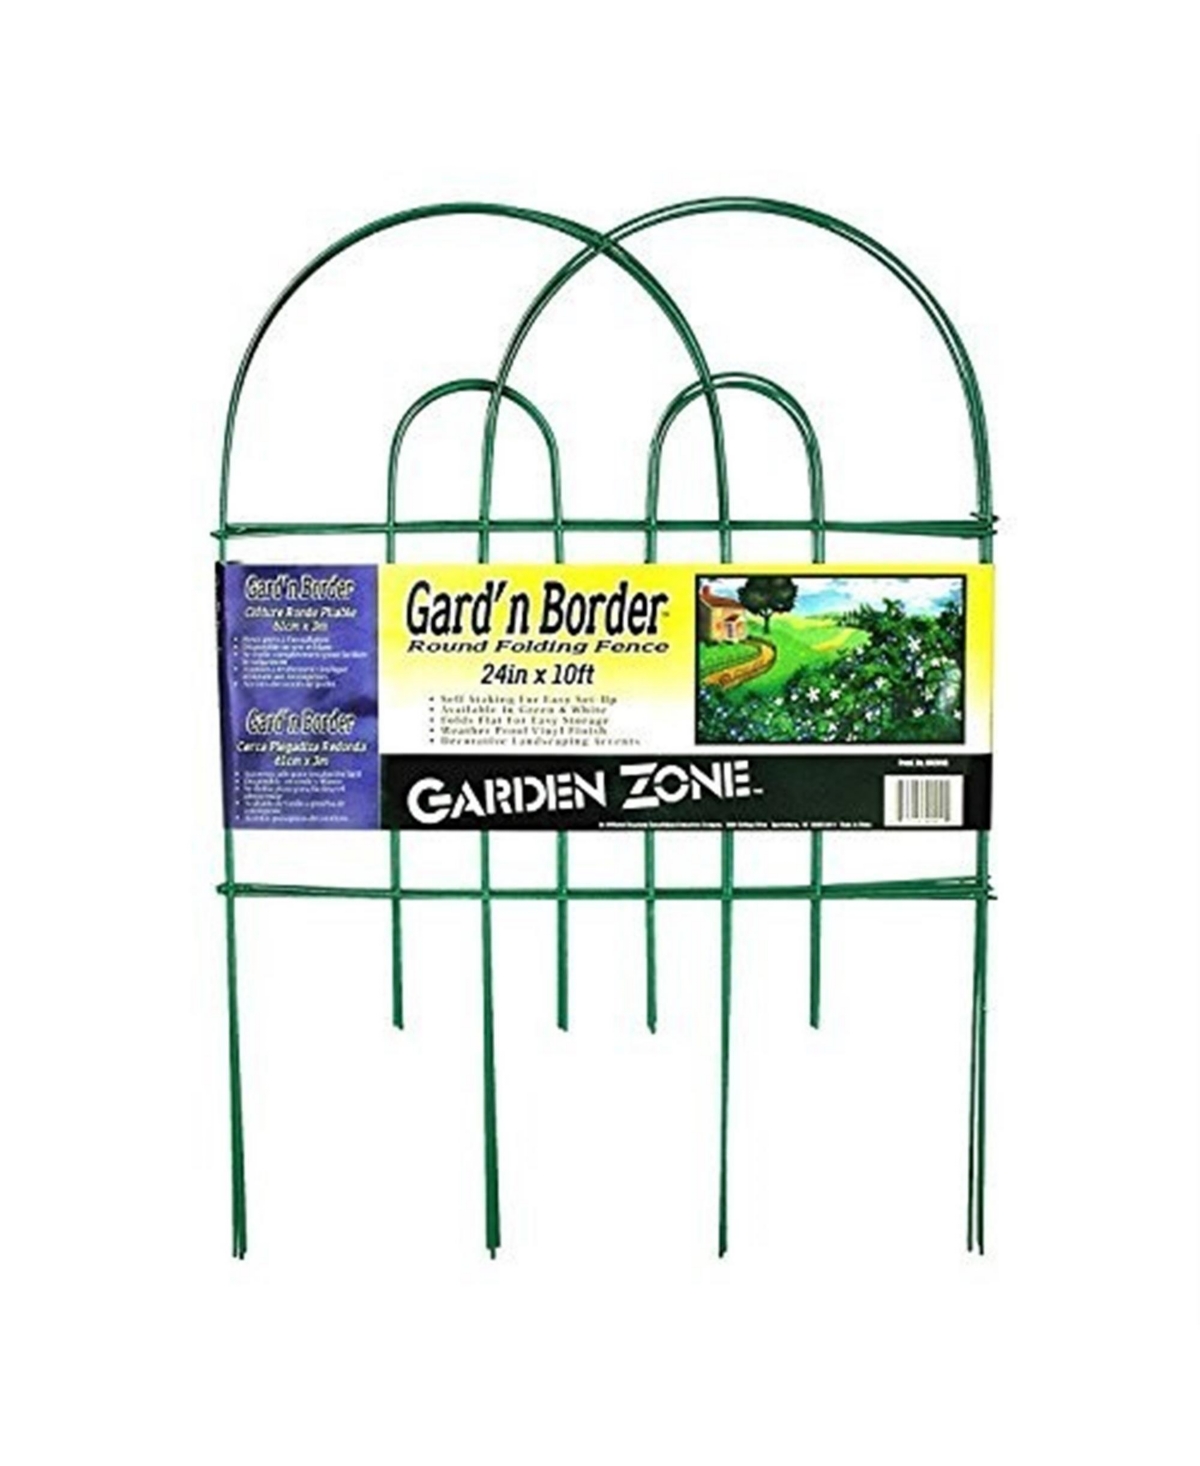 Garden Border Round Folding Fence, Green, 24 x 10' - Green